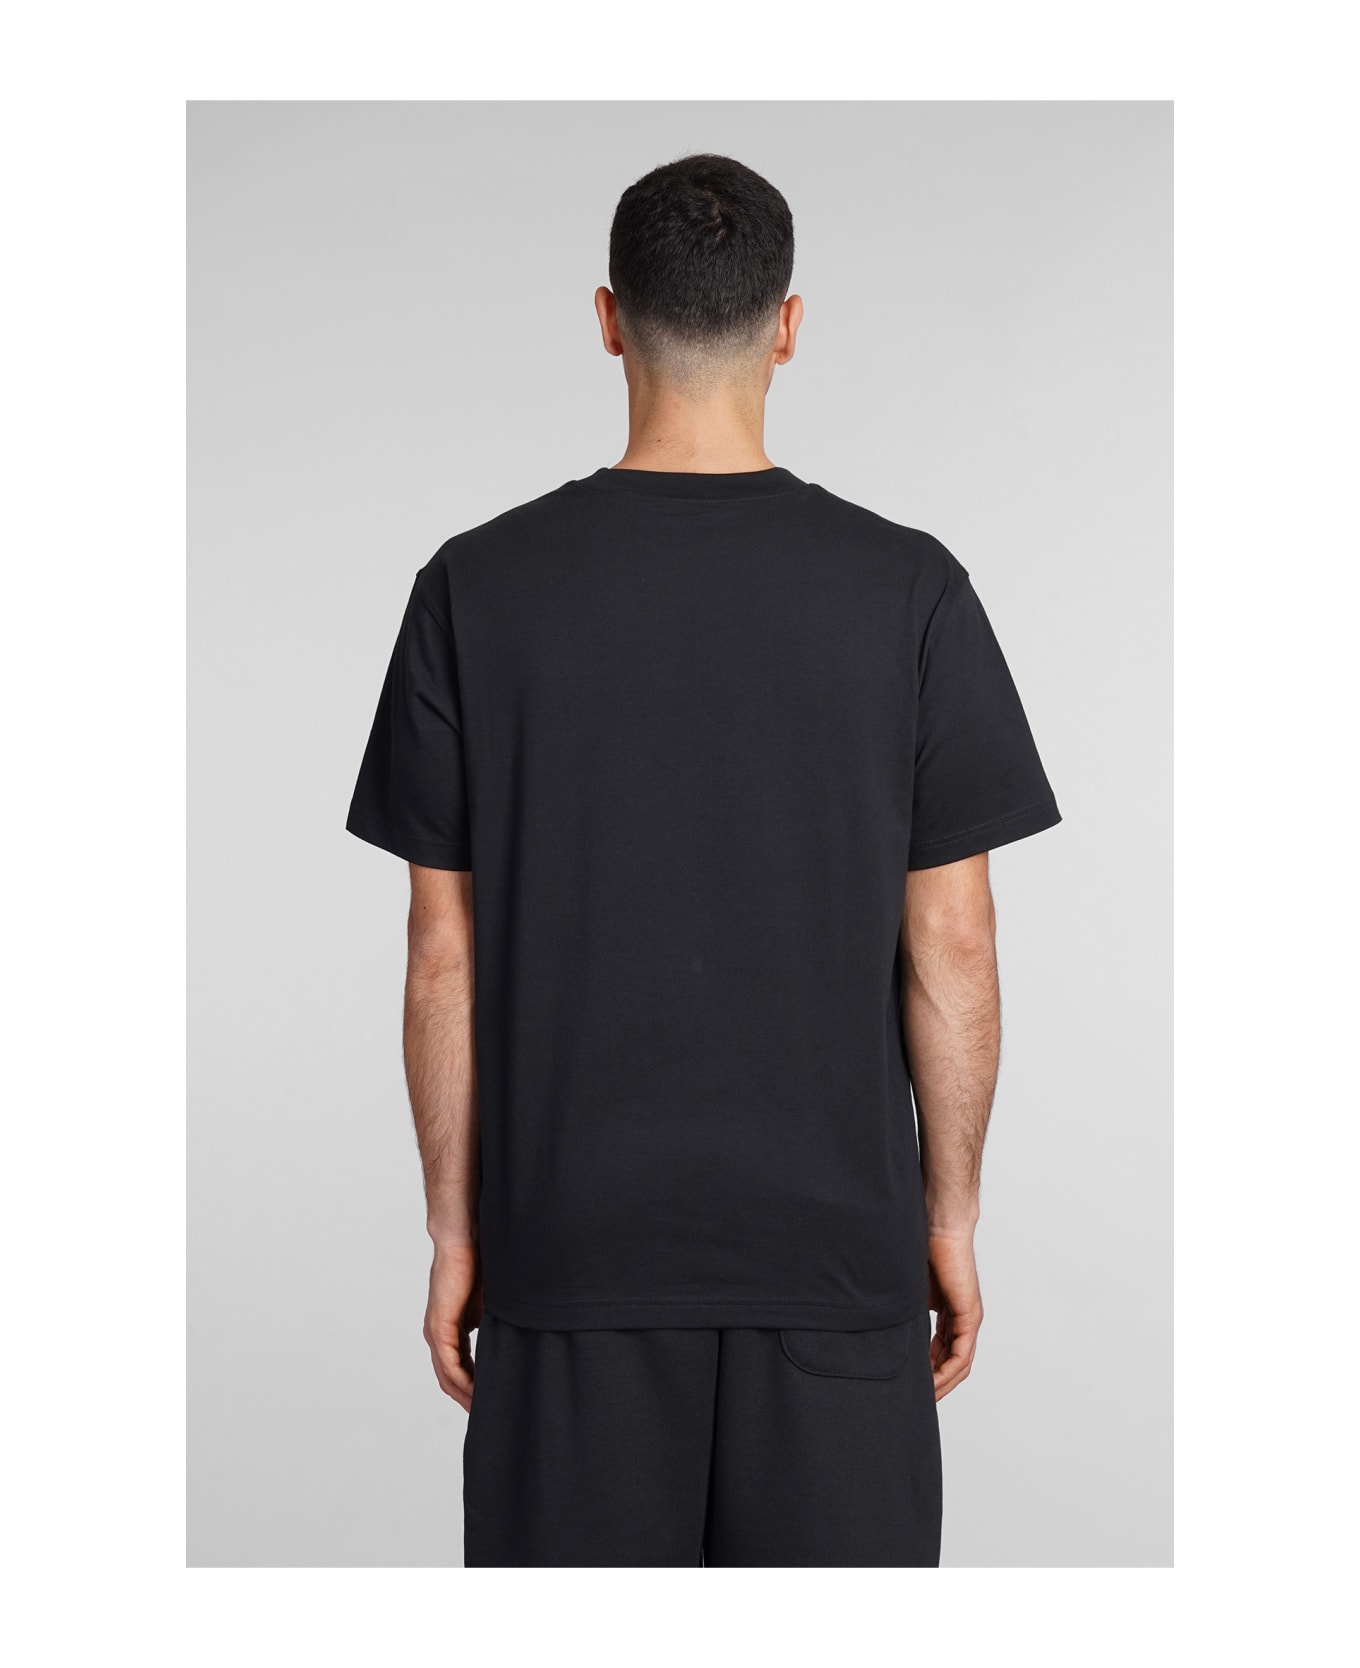 New Balance T-shirt In Black Cotton - black シャツ